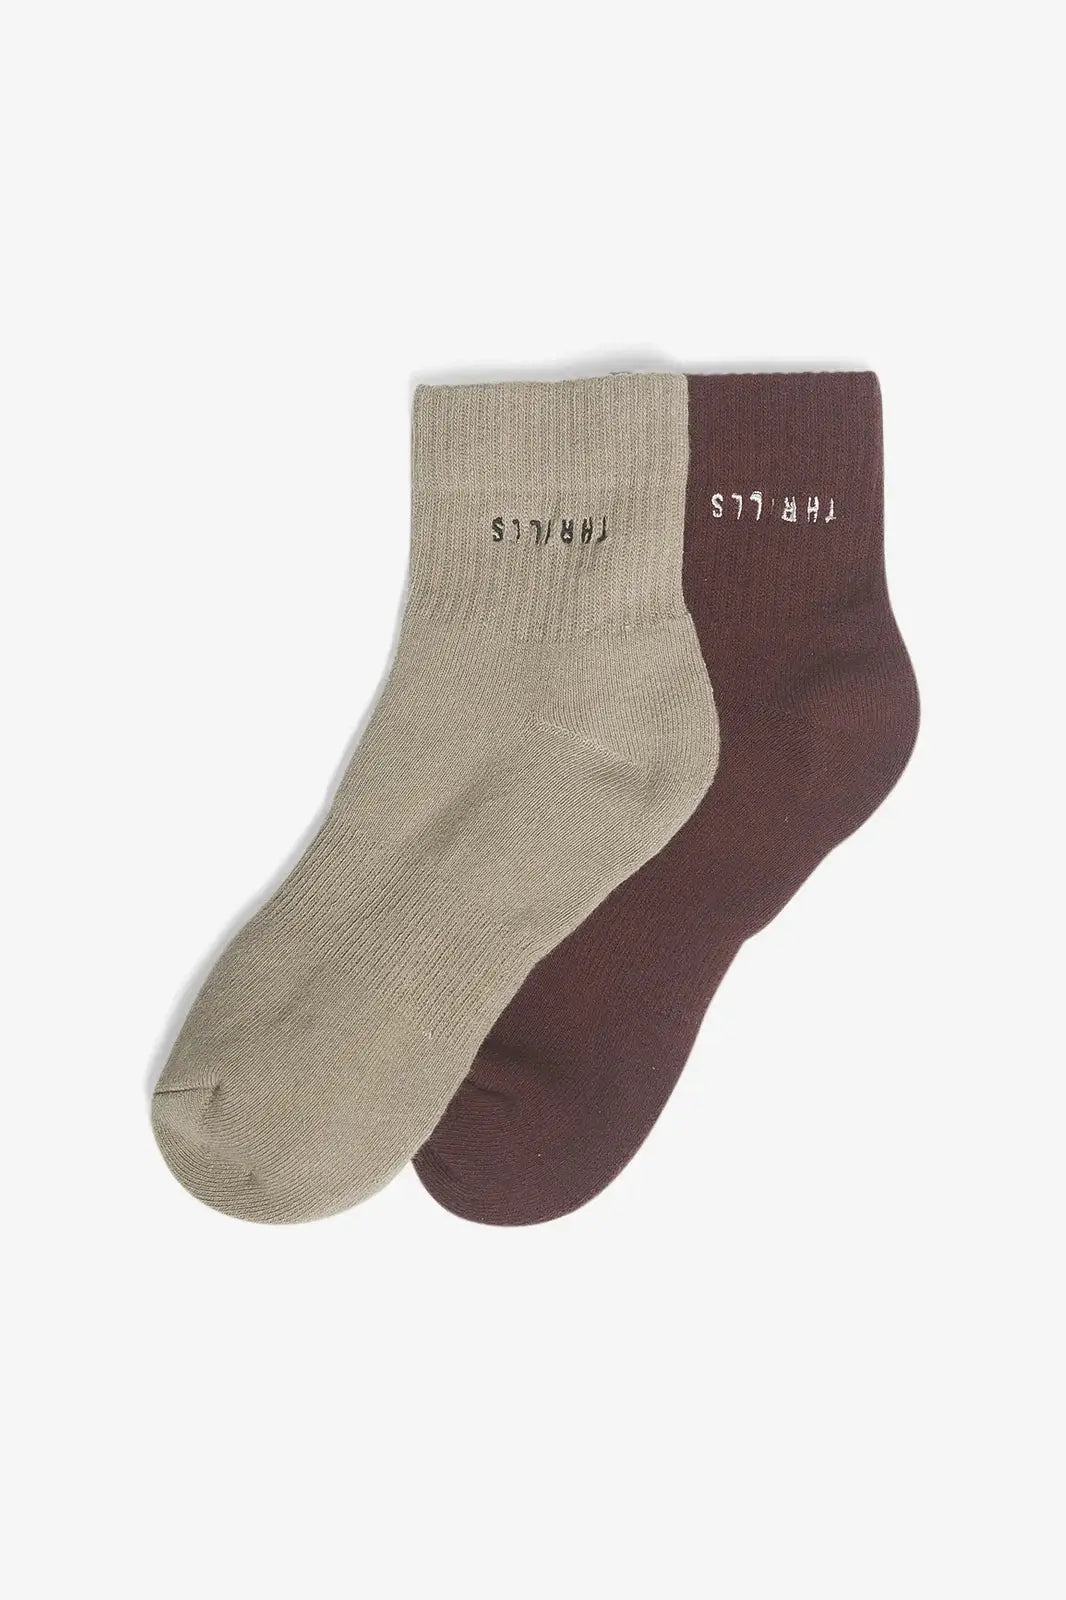 THRILLS minimal 2 pack sock - Oyster grey & deep plum